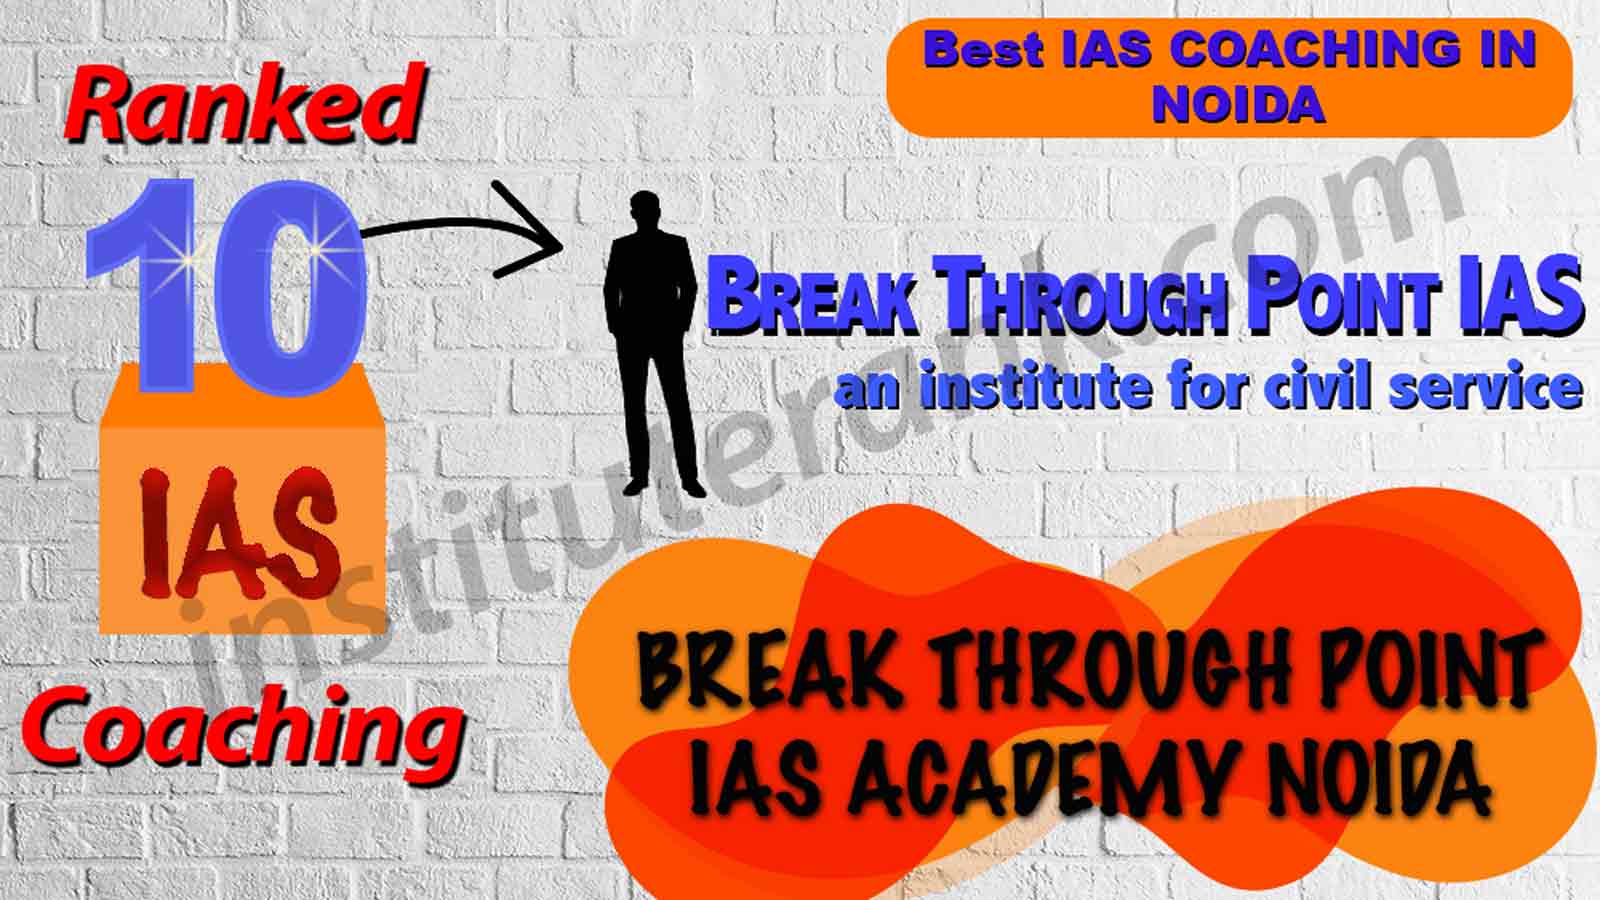 Best IAS Coaching in Noida